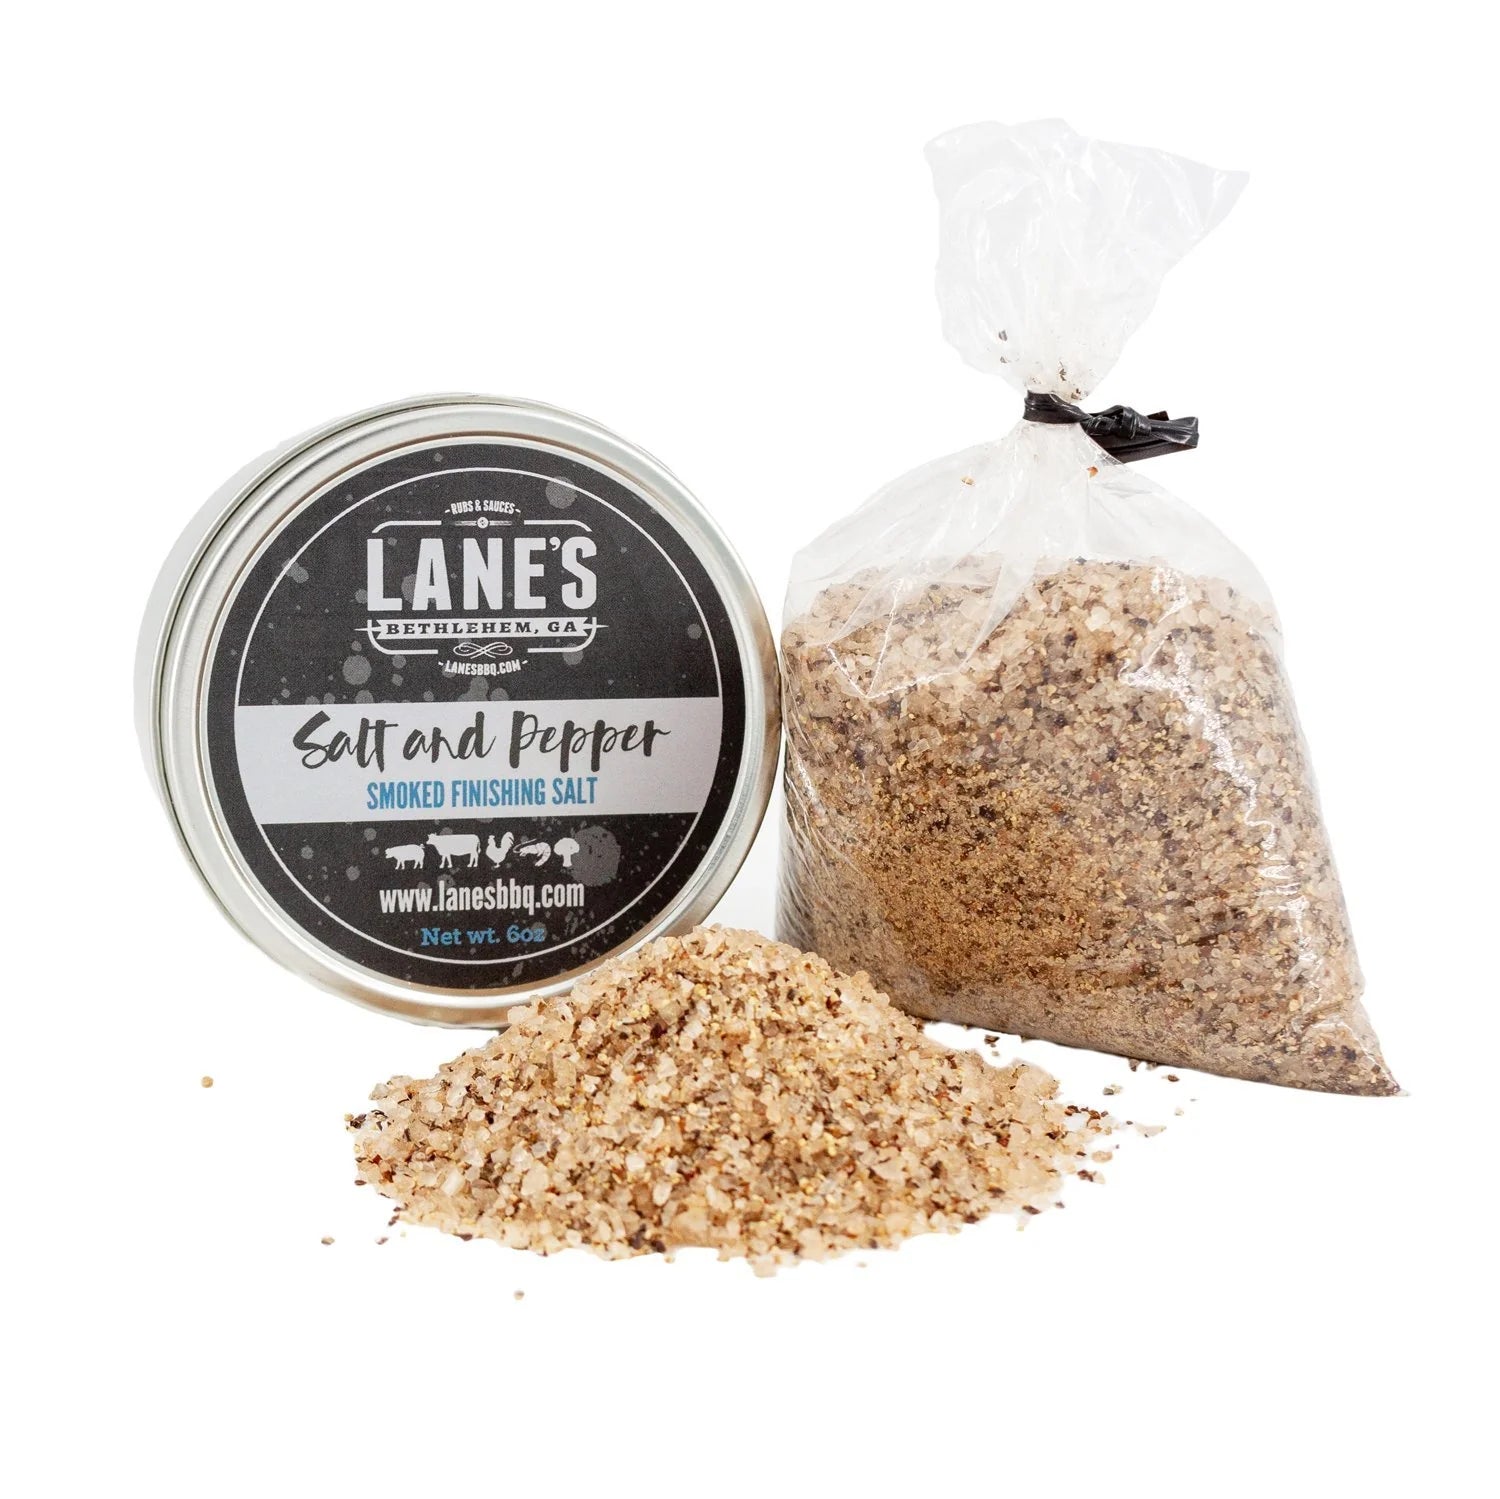 Lane's Salt and Pepper Smoked Finishing Salt